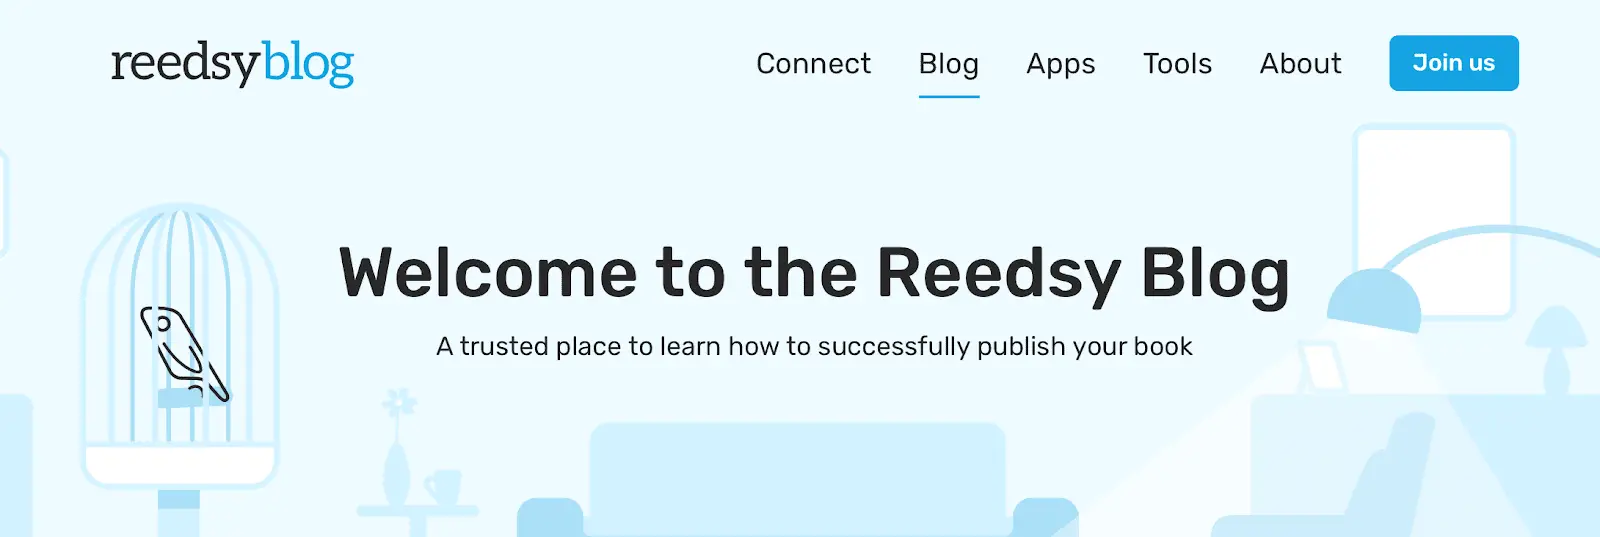 reedsy self-publishing resource